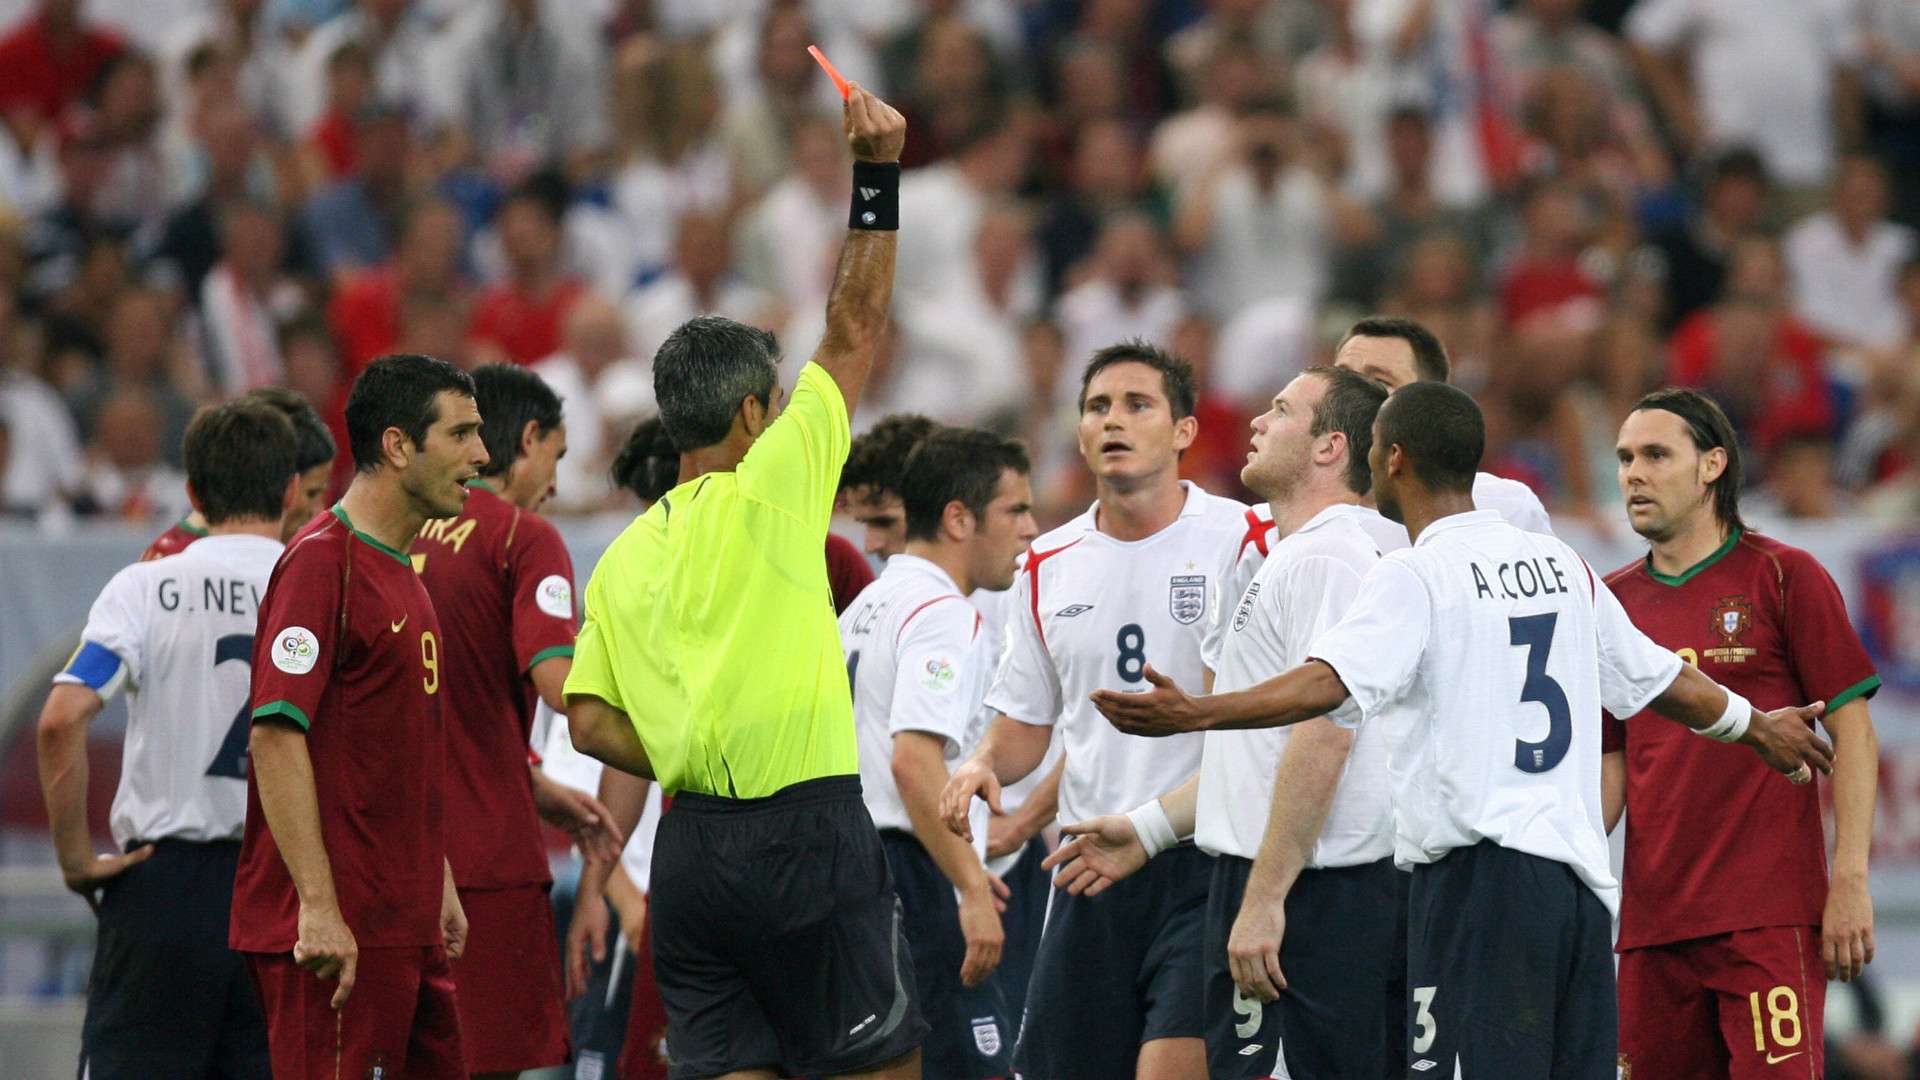 Wayne Rooney red card England vs Portugal World Cup 2006 Quarter Final